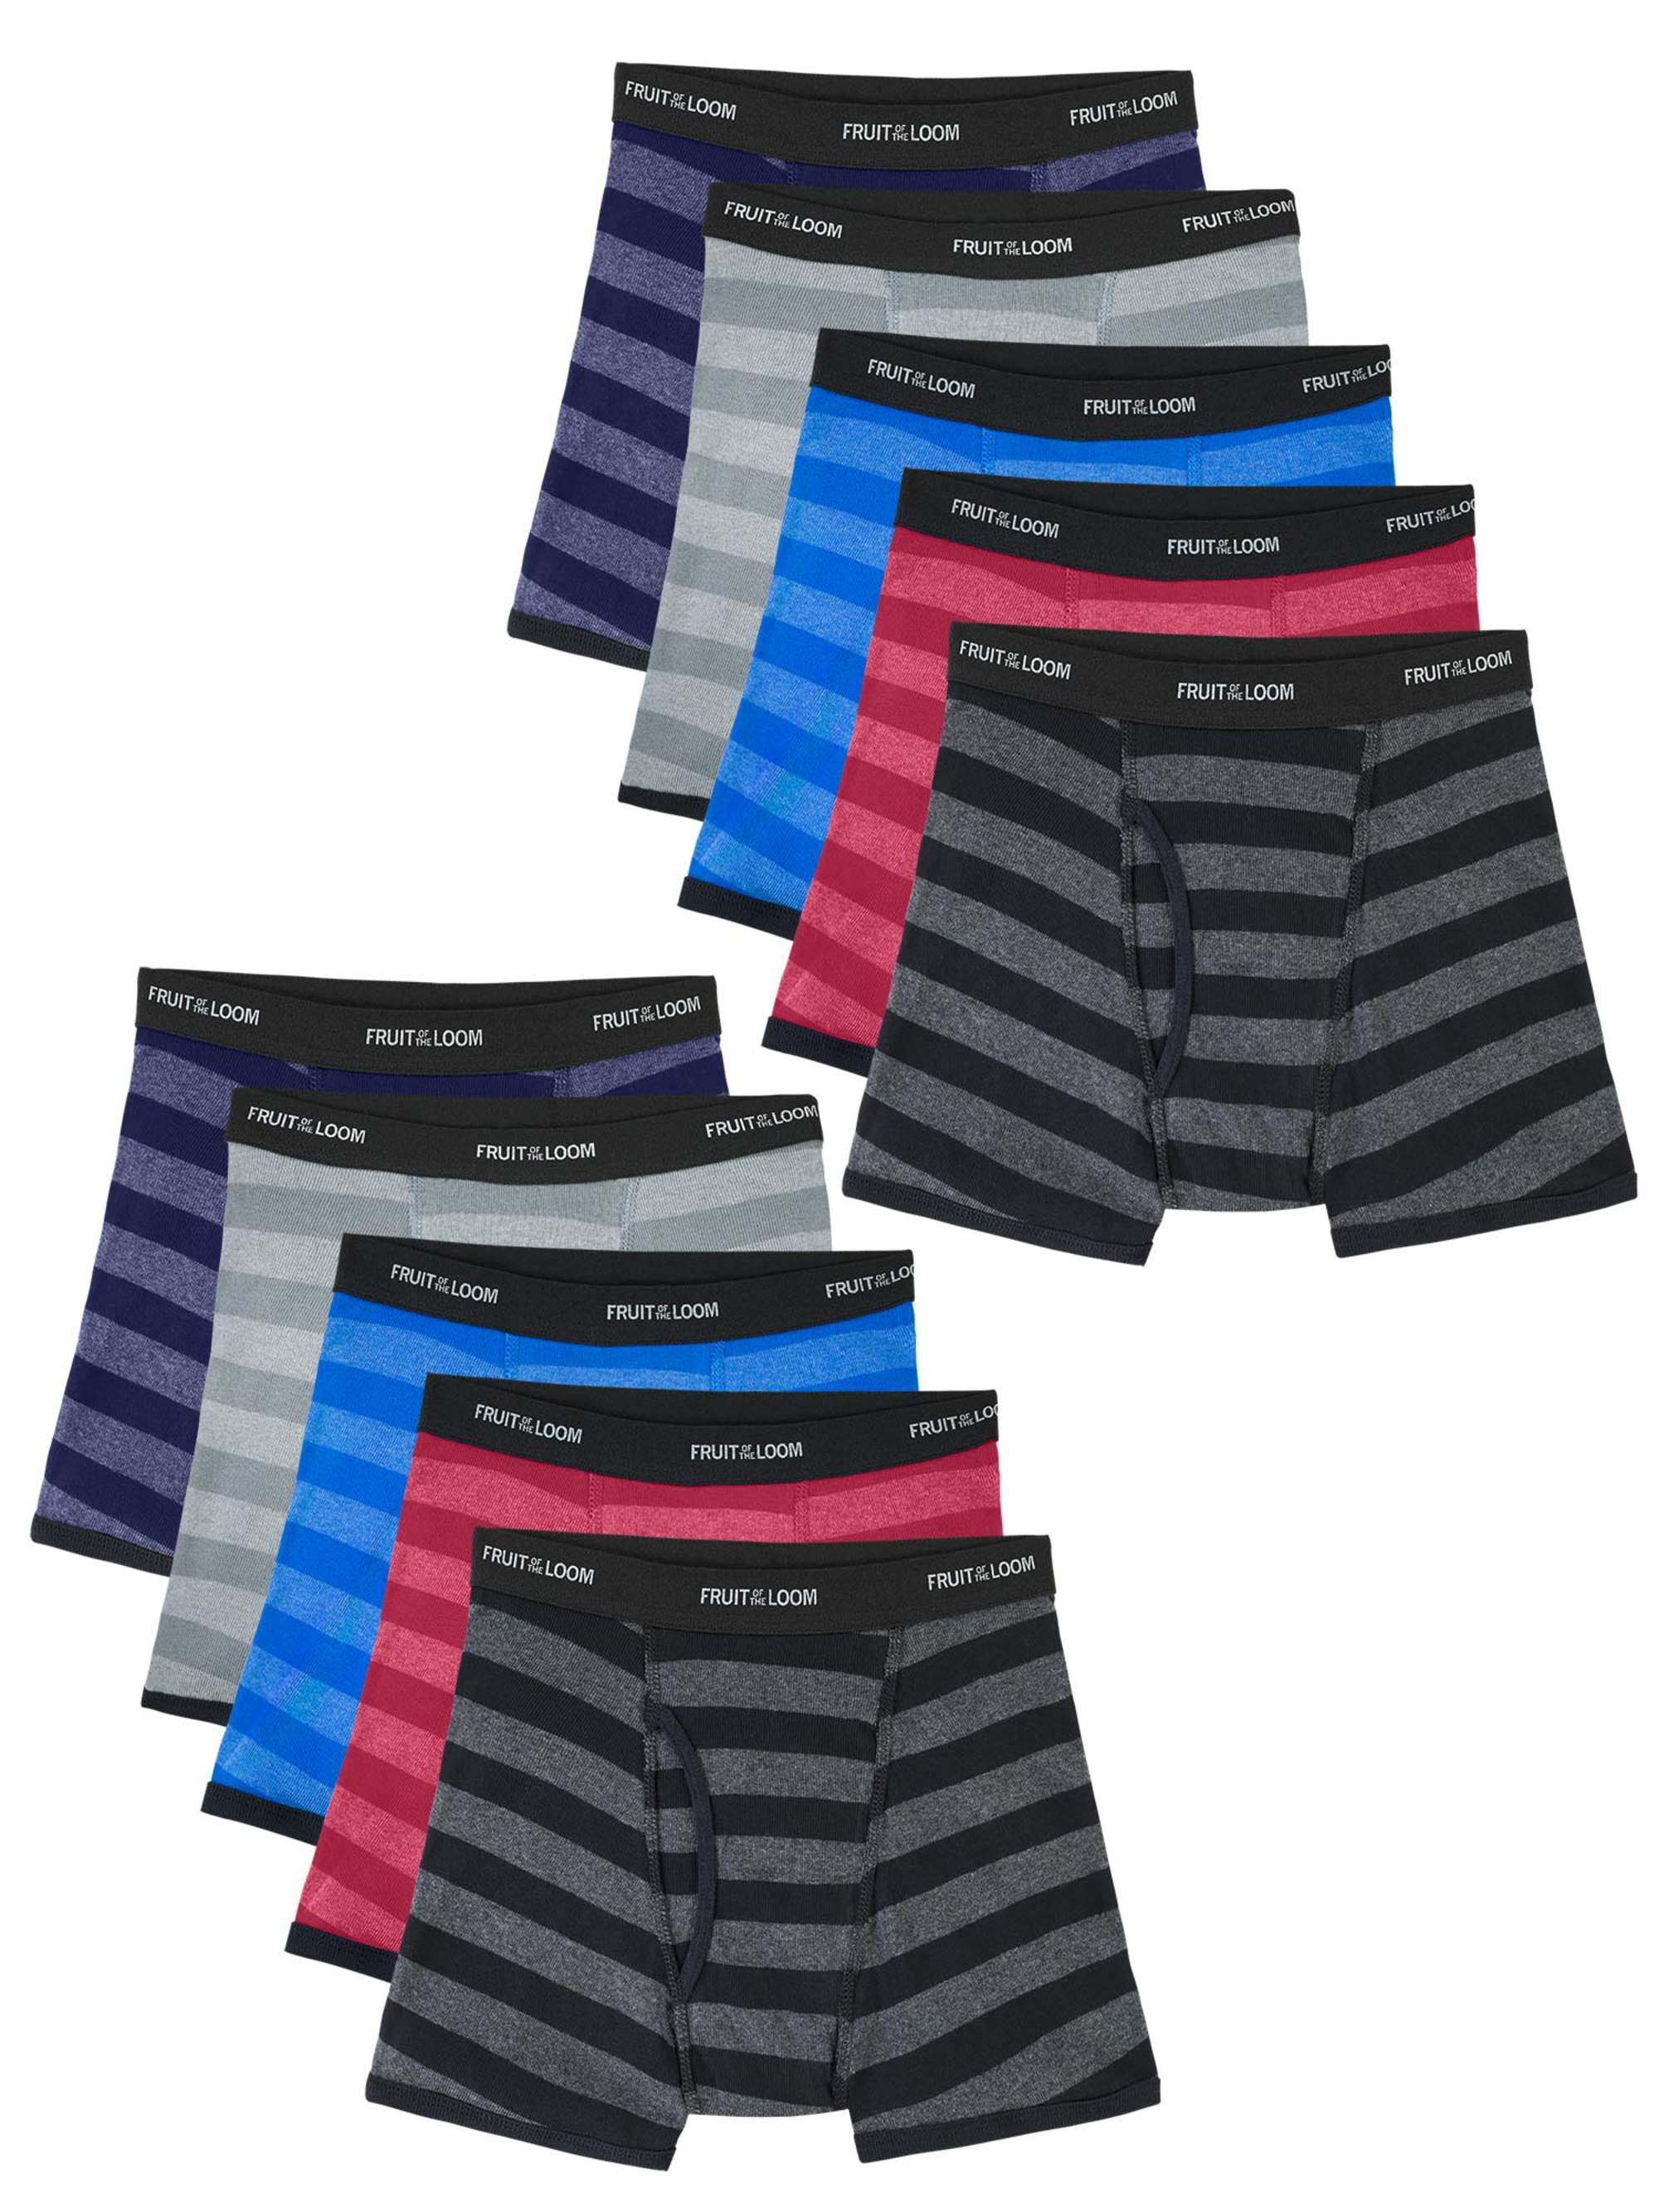 Fruit of the Loom Boys Underwear, 10 Pack Striped Boxer Brief Underwear,  Size XL (18/20)